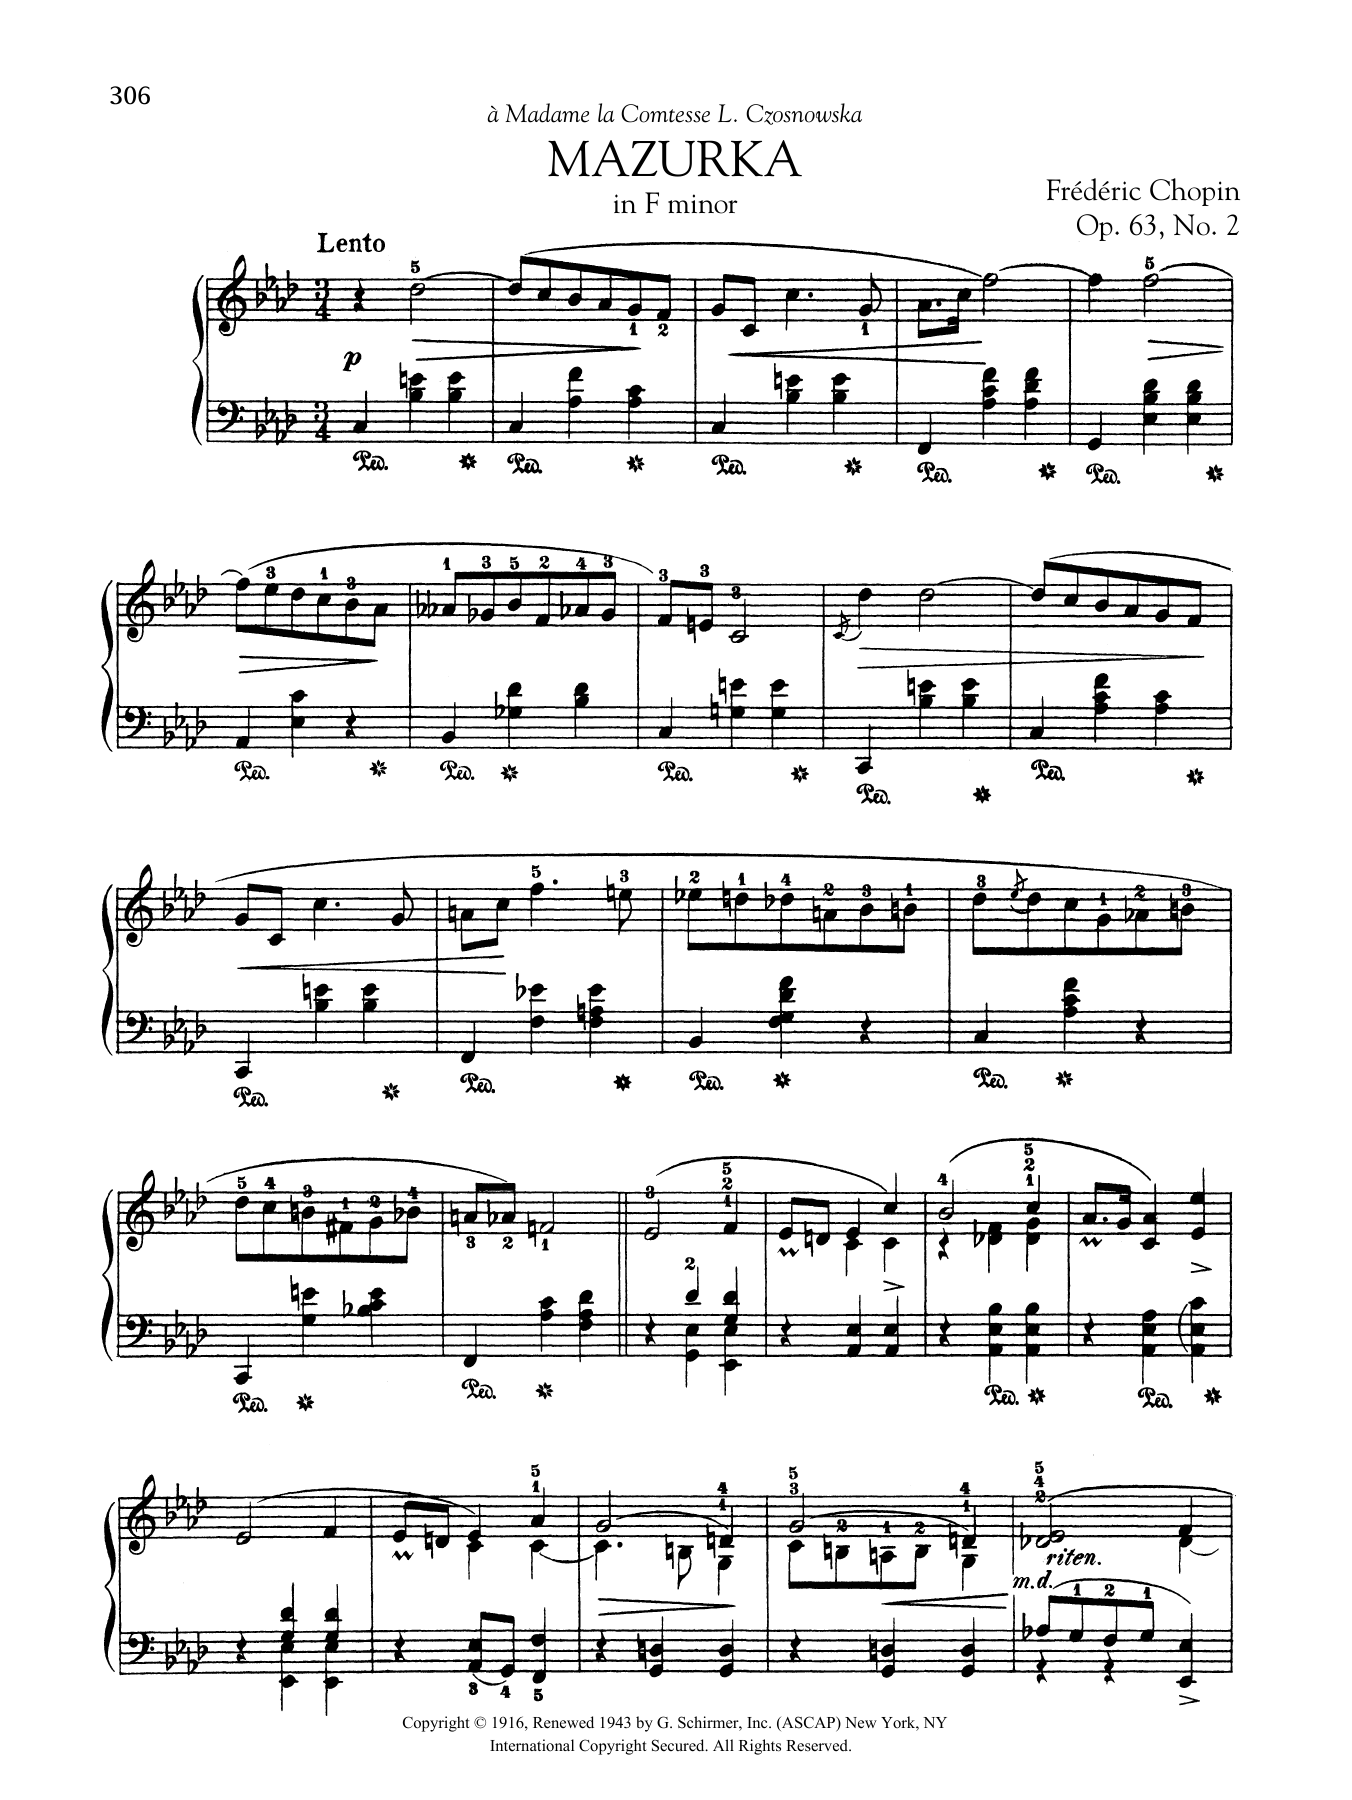 Download Frederic Chopin Mazurka in F minor, Op. 63, No. 2 Sheet Music